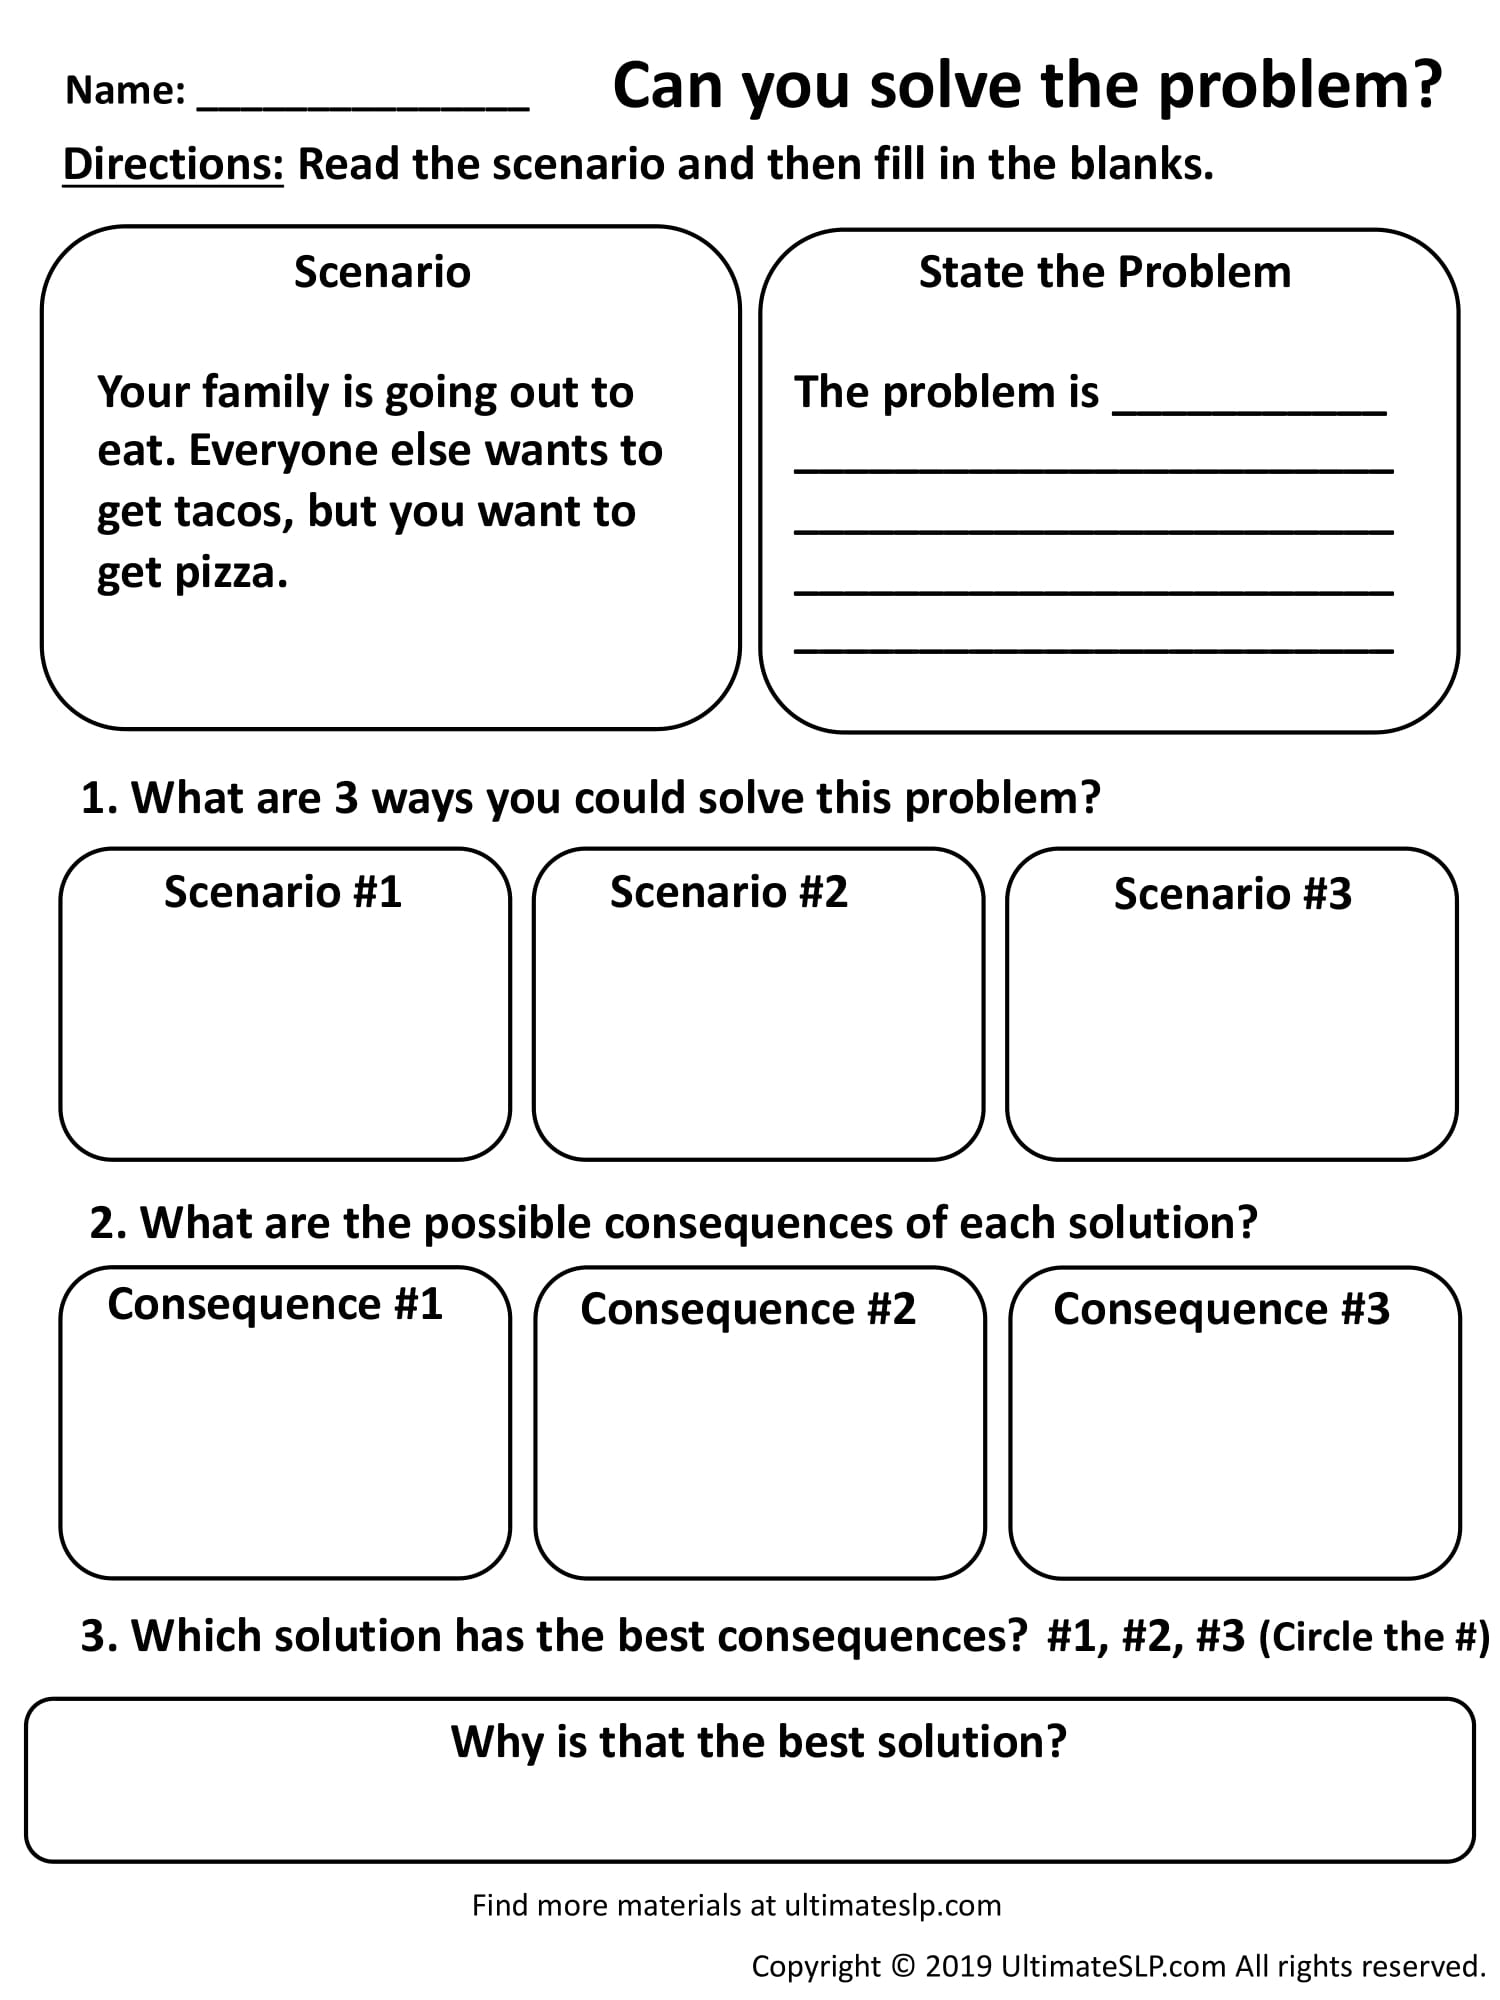 Can You Solve the Problem Worksheet 22 - Ultimate SLP Intended For Problem And Solution Worksheet